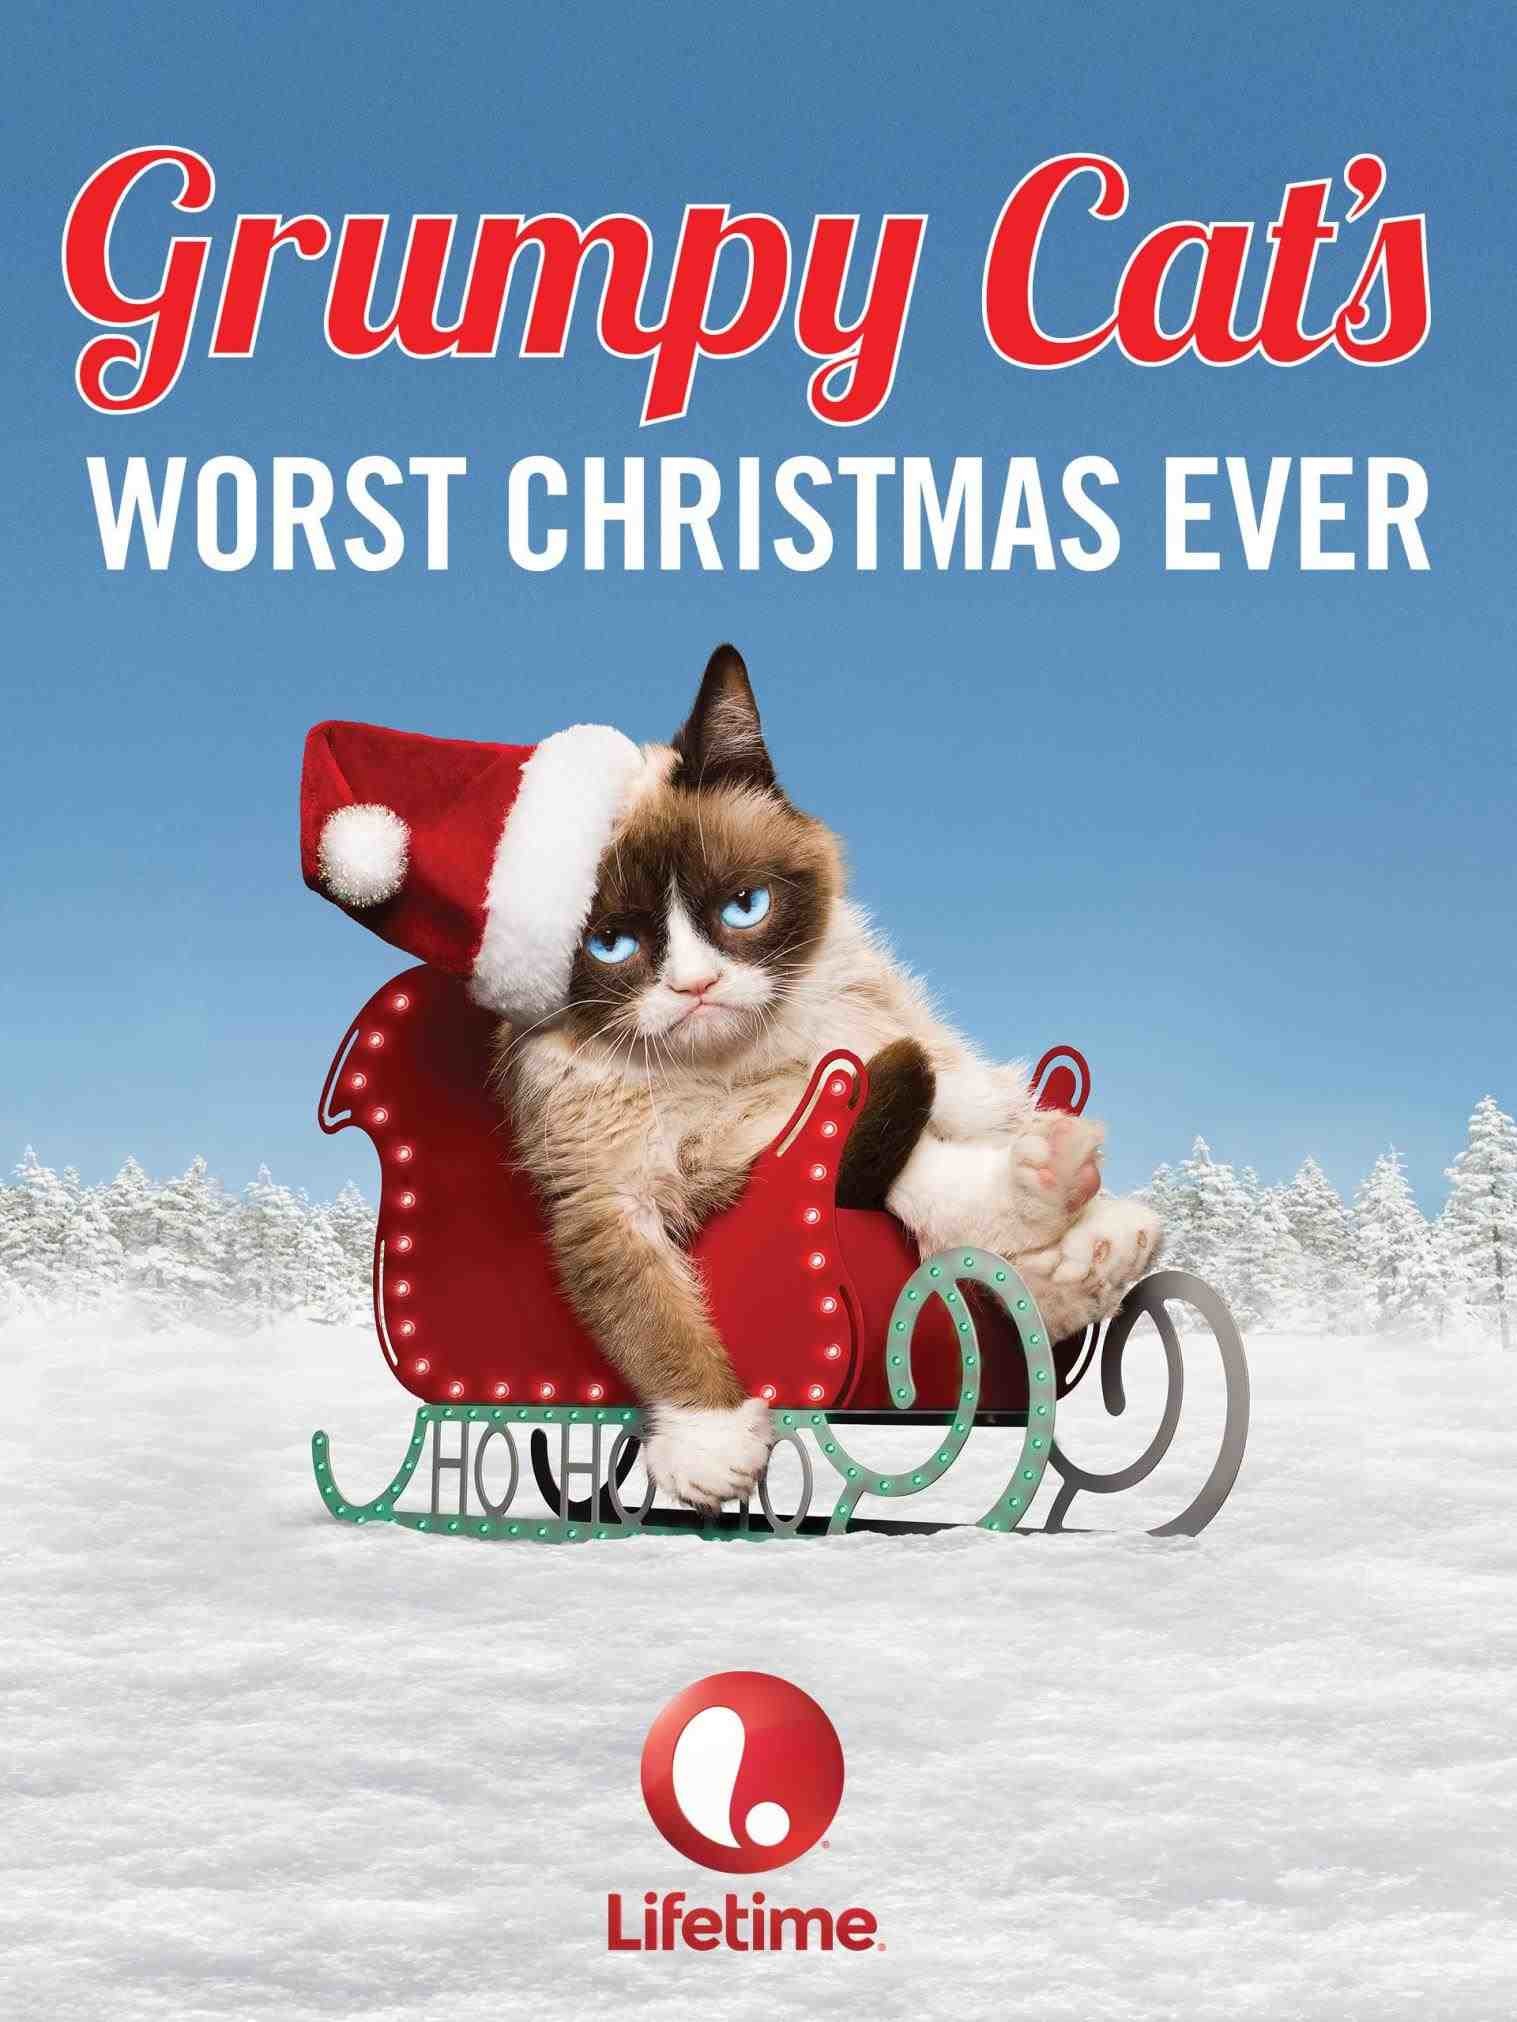 1517x2022 ad youtube the worst christmas photos best u gift ideas! ad youtube grumpy  cats ever